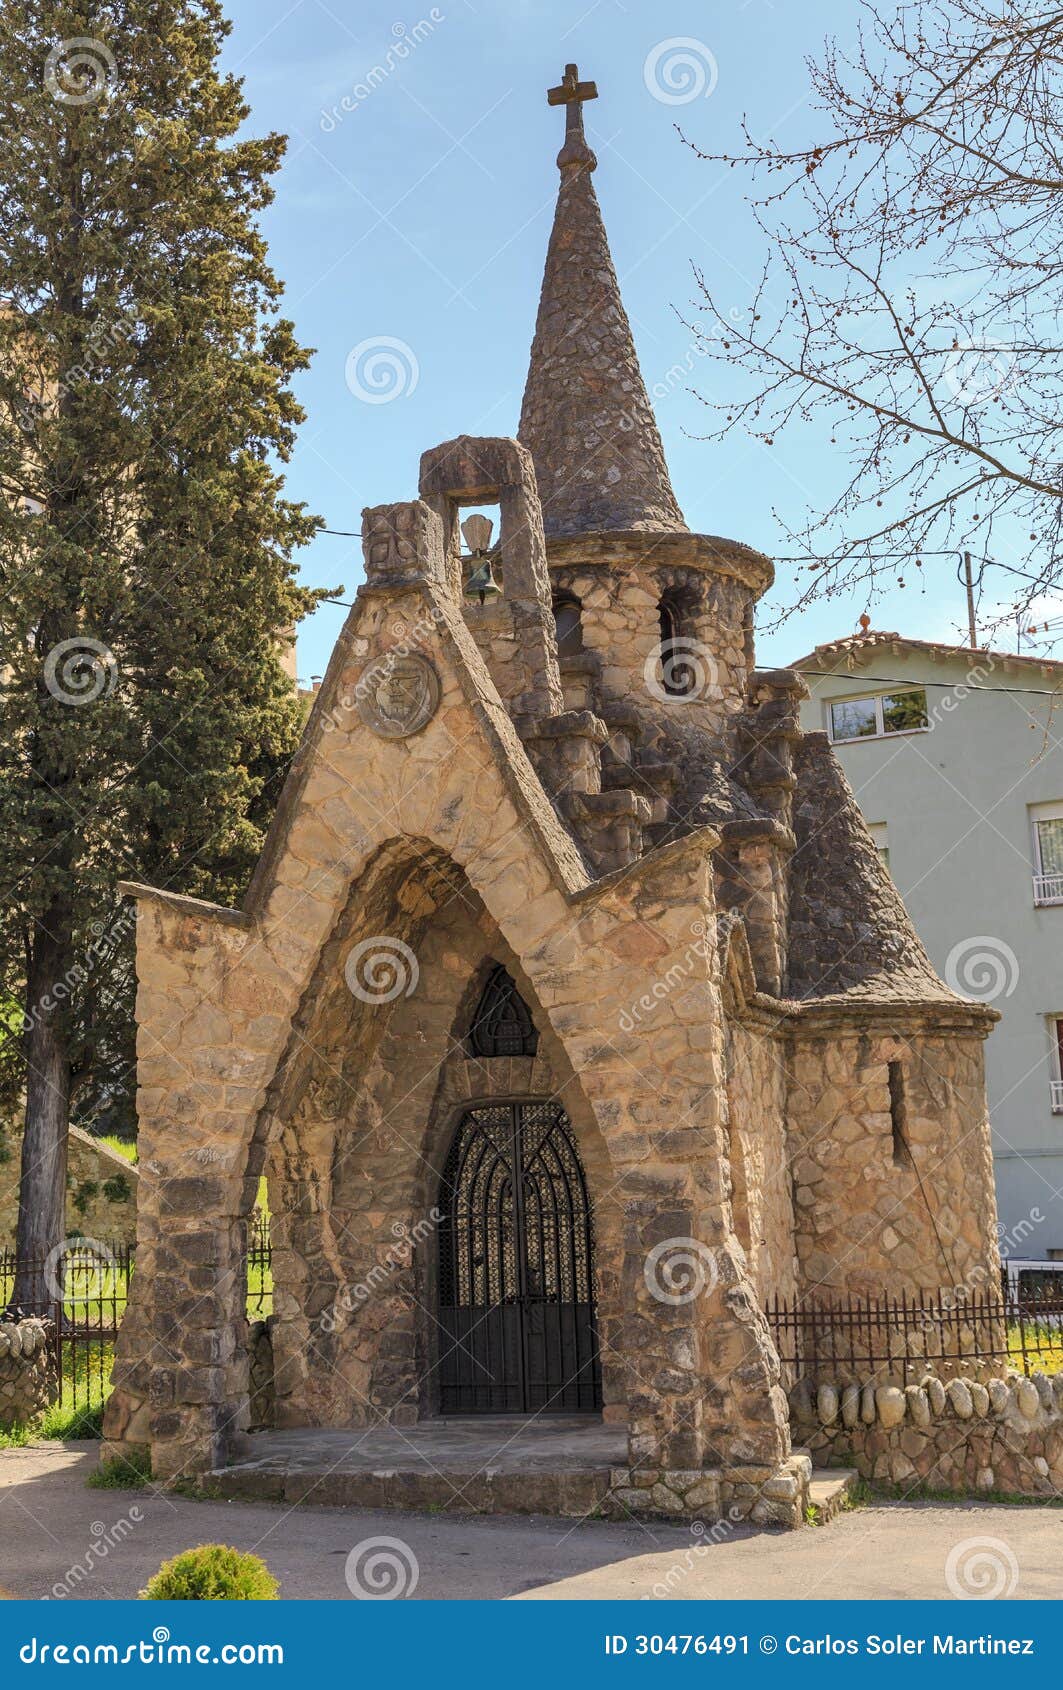 church of sant marti de sentfores